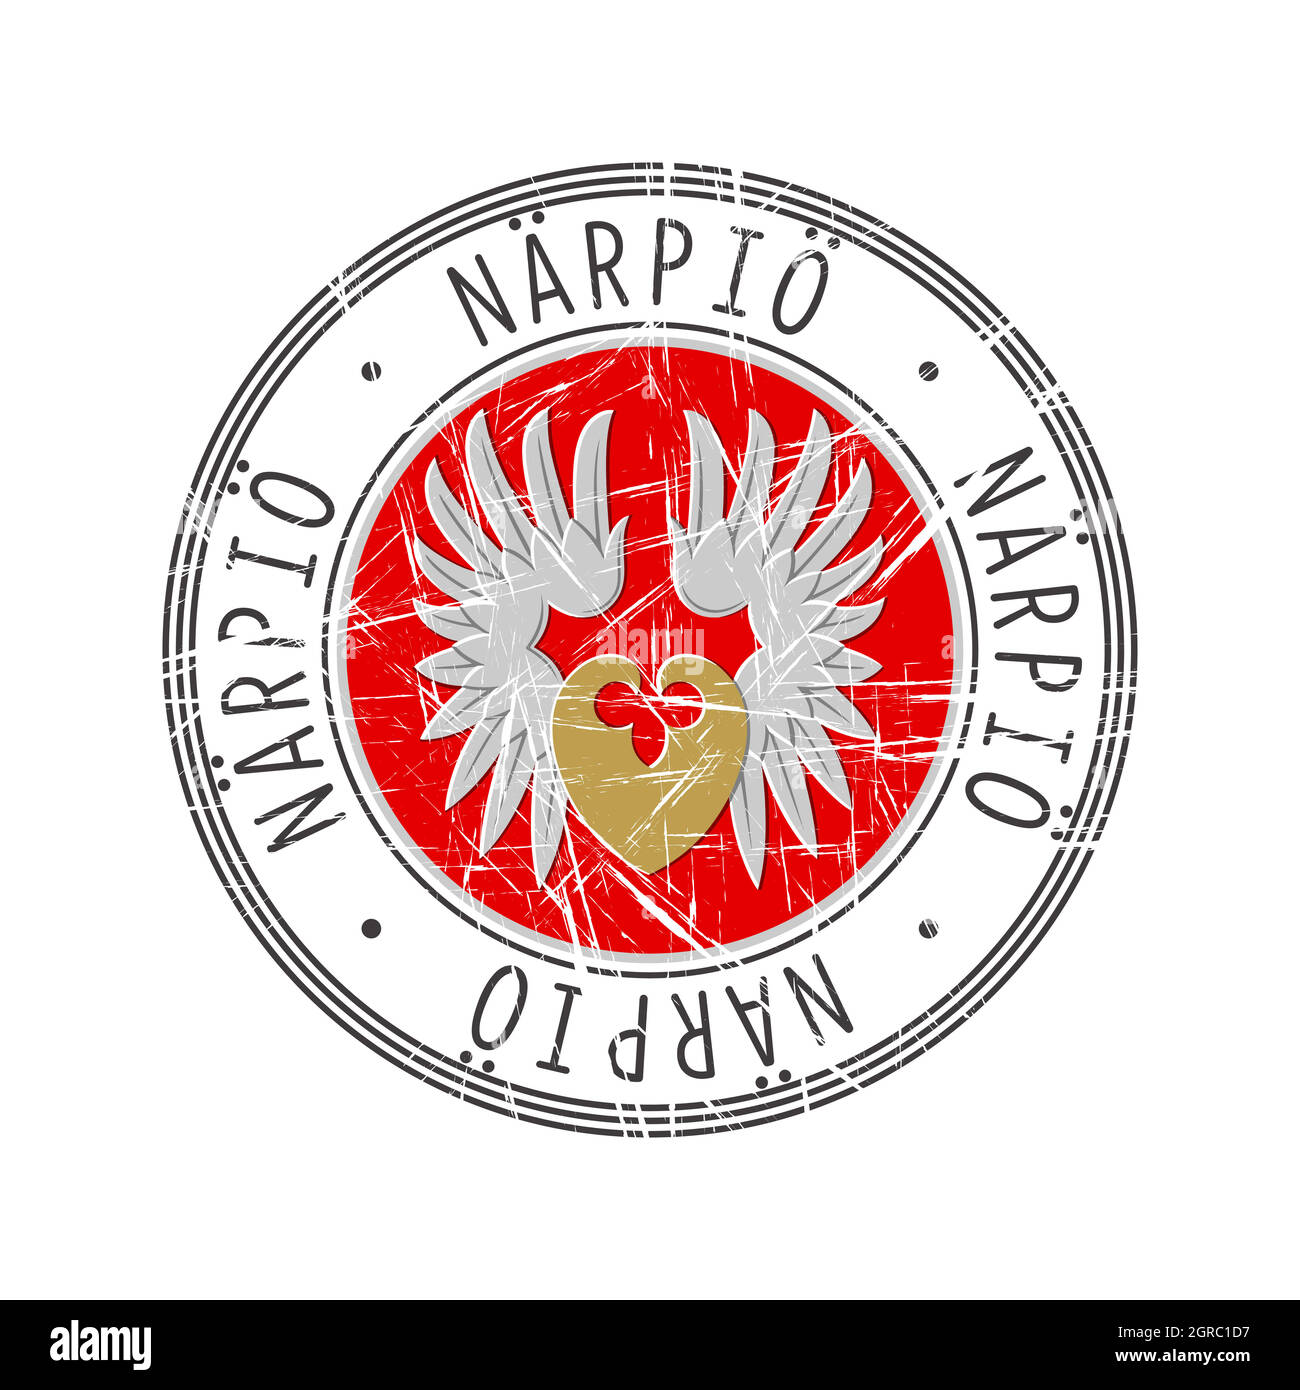 Narpio city postal rubber stamp Stock Vector